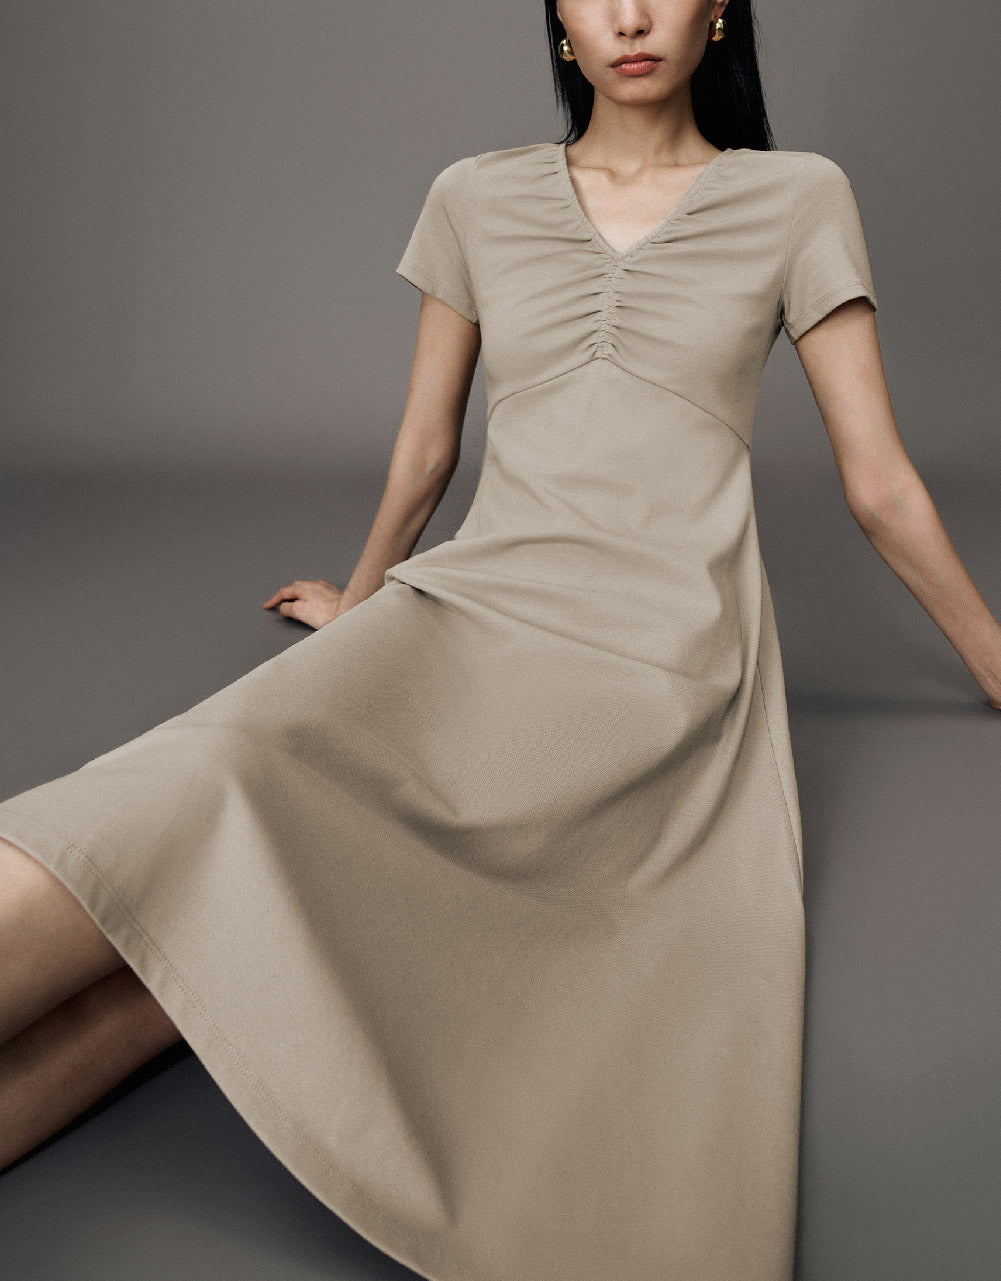 Standard Sleeve V-Neck A-Line Dress